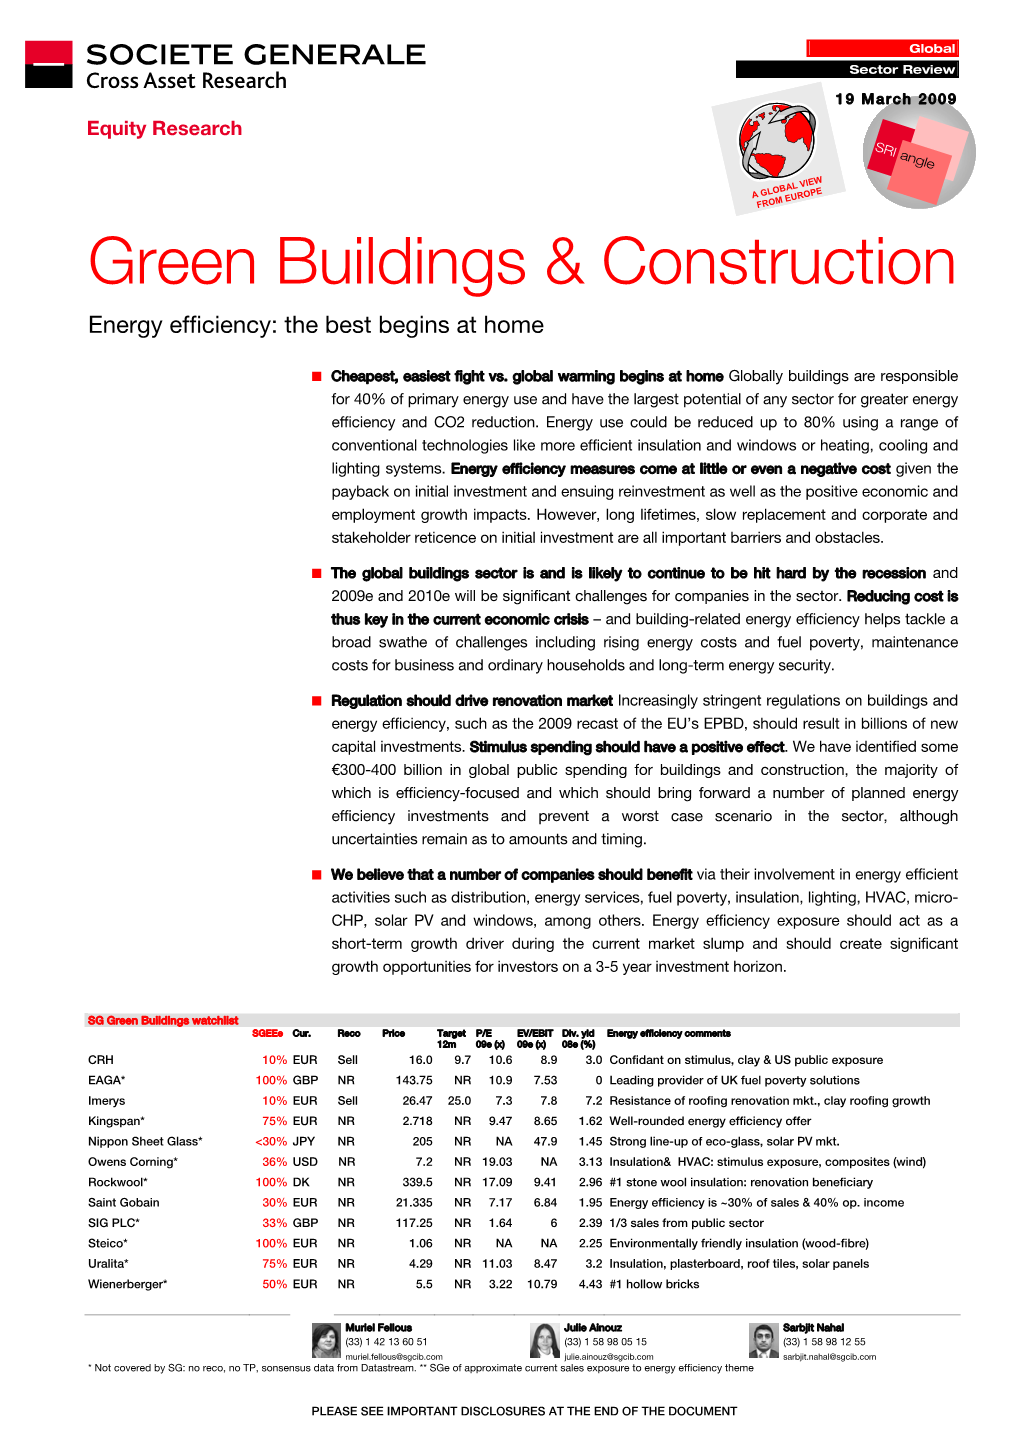 Green Buildings & Construction